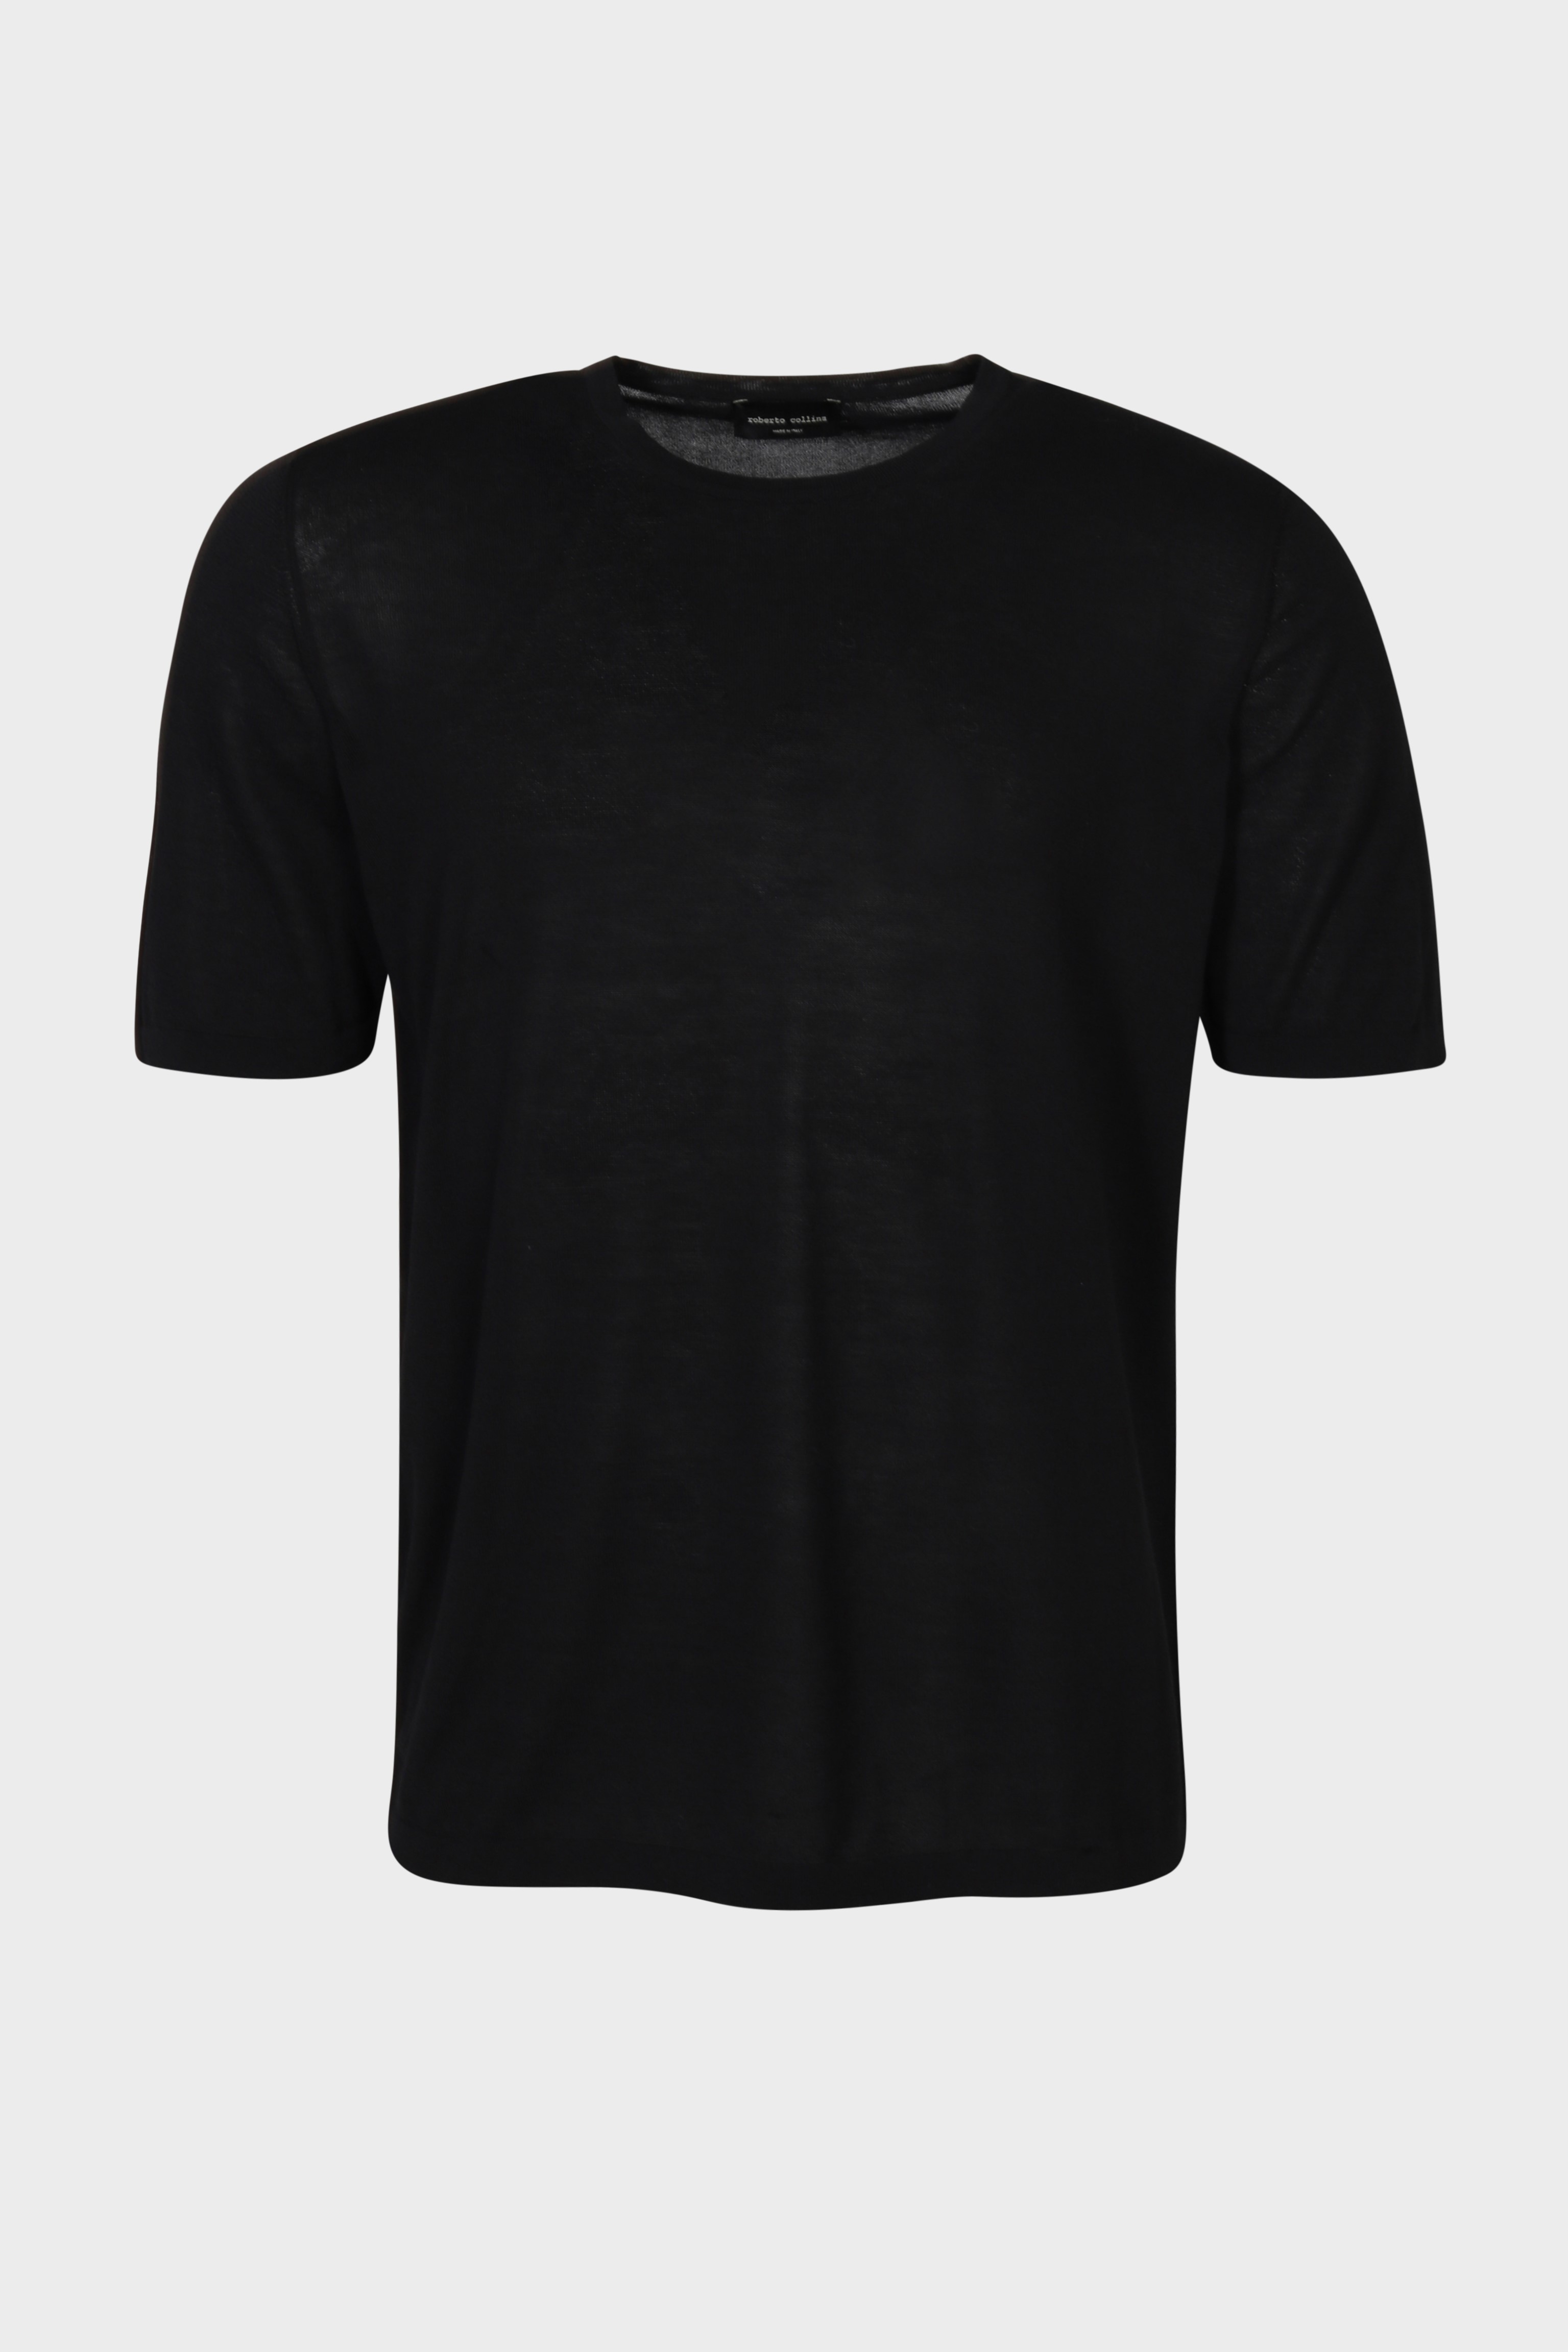 ROBERTO COLLINA Cotton Knit T-Shirt in Black